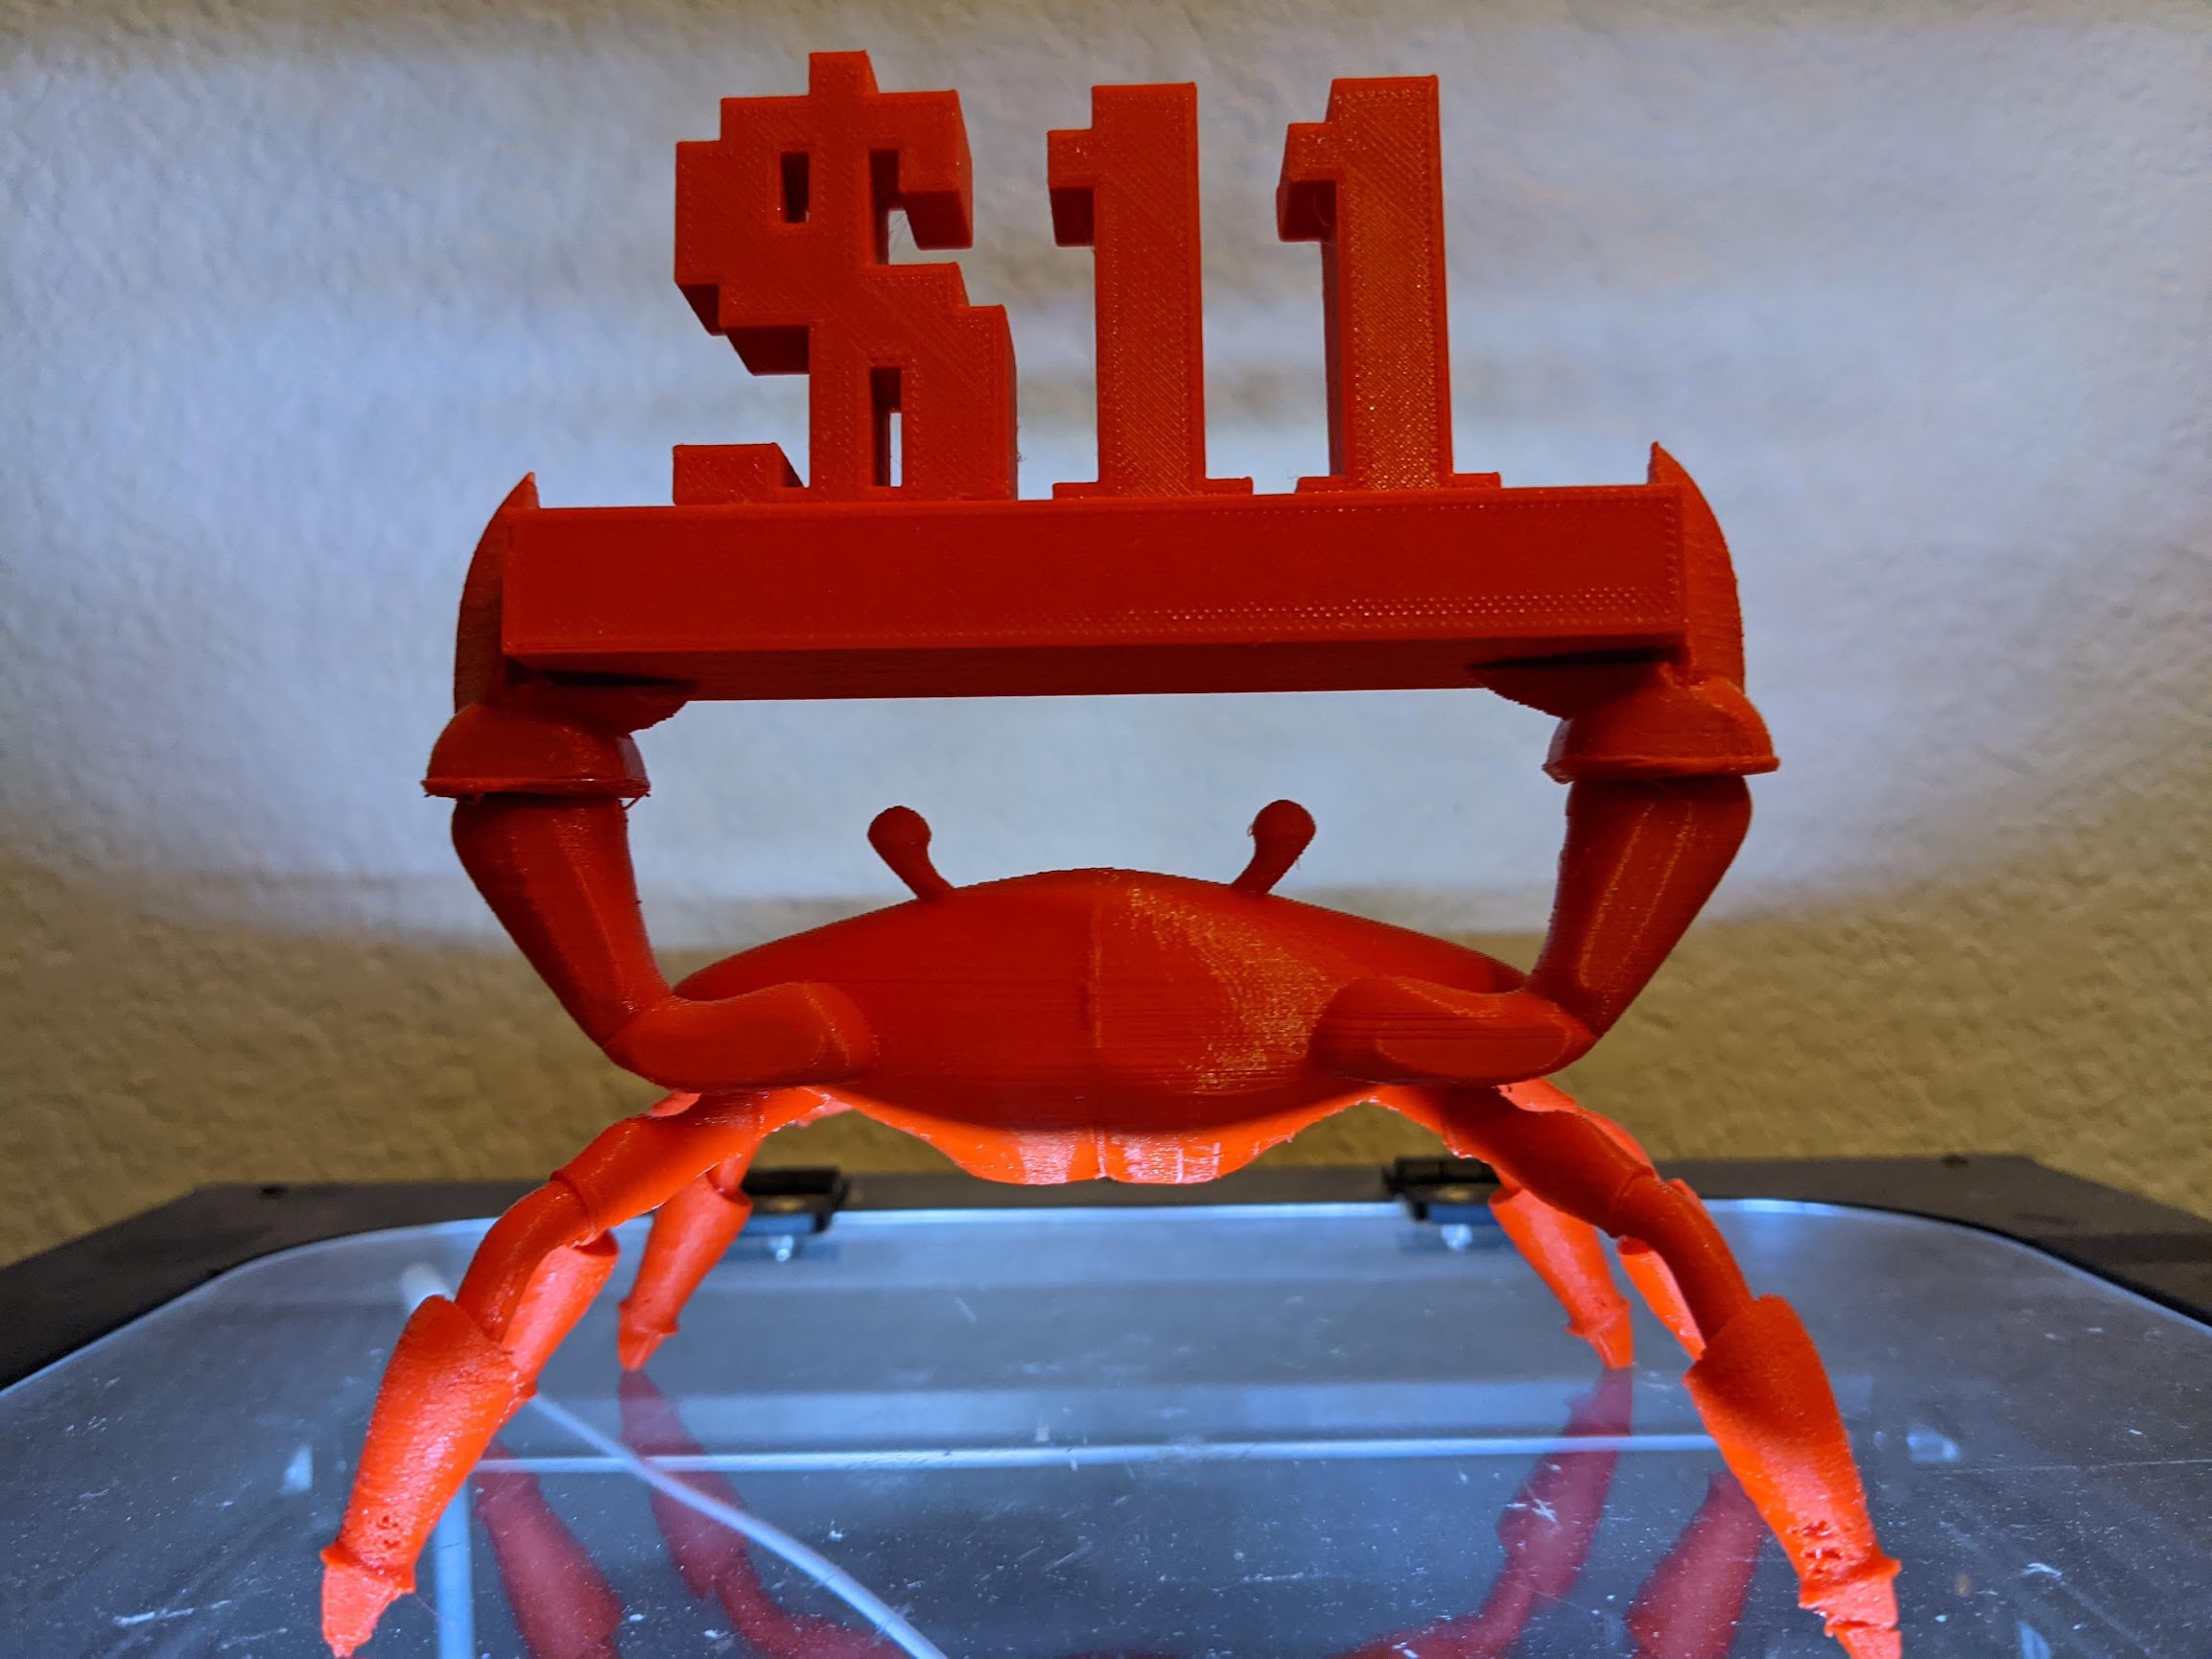 $11 Old School Runescape Rave Crab